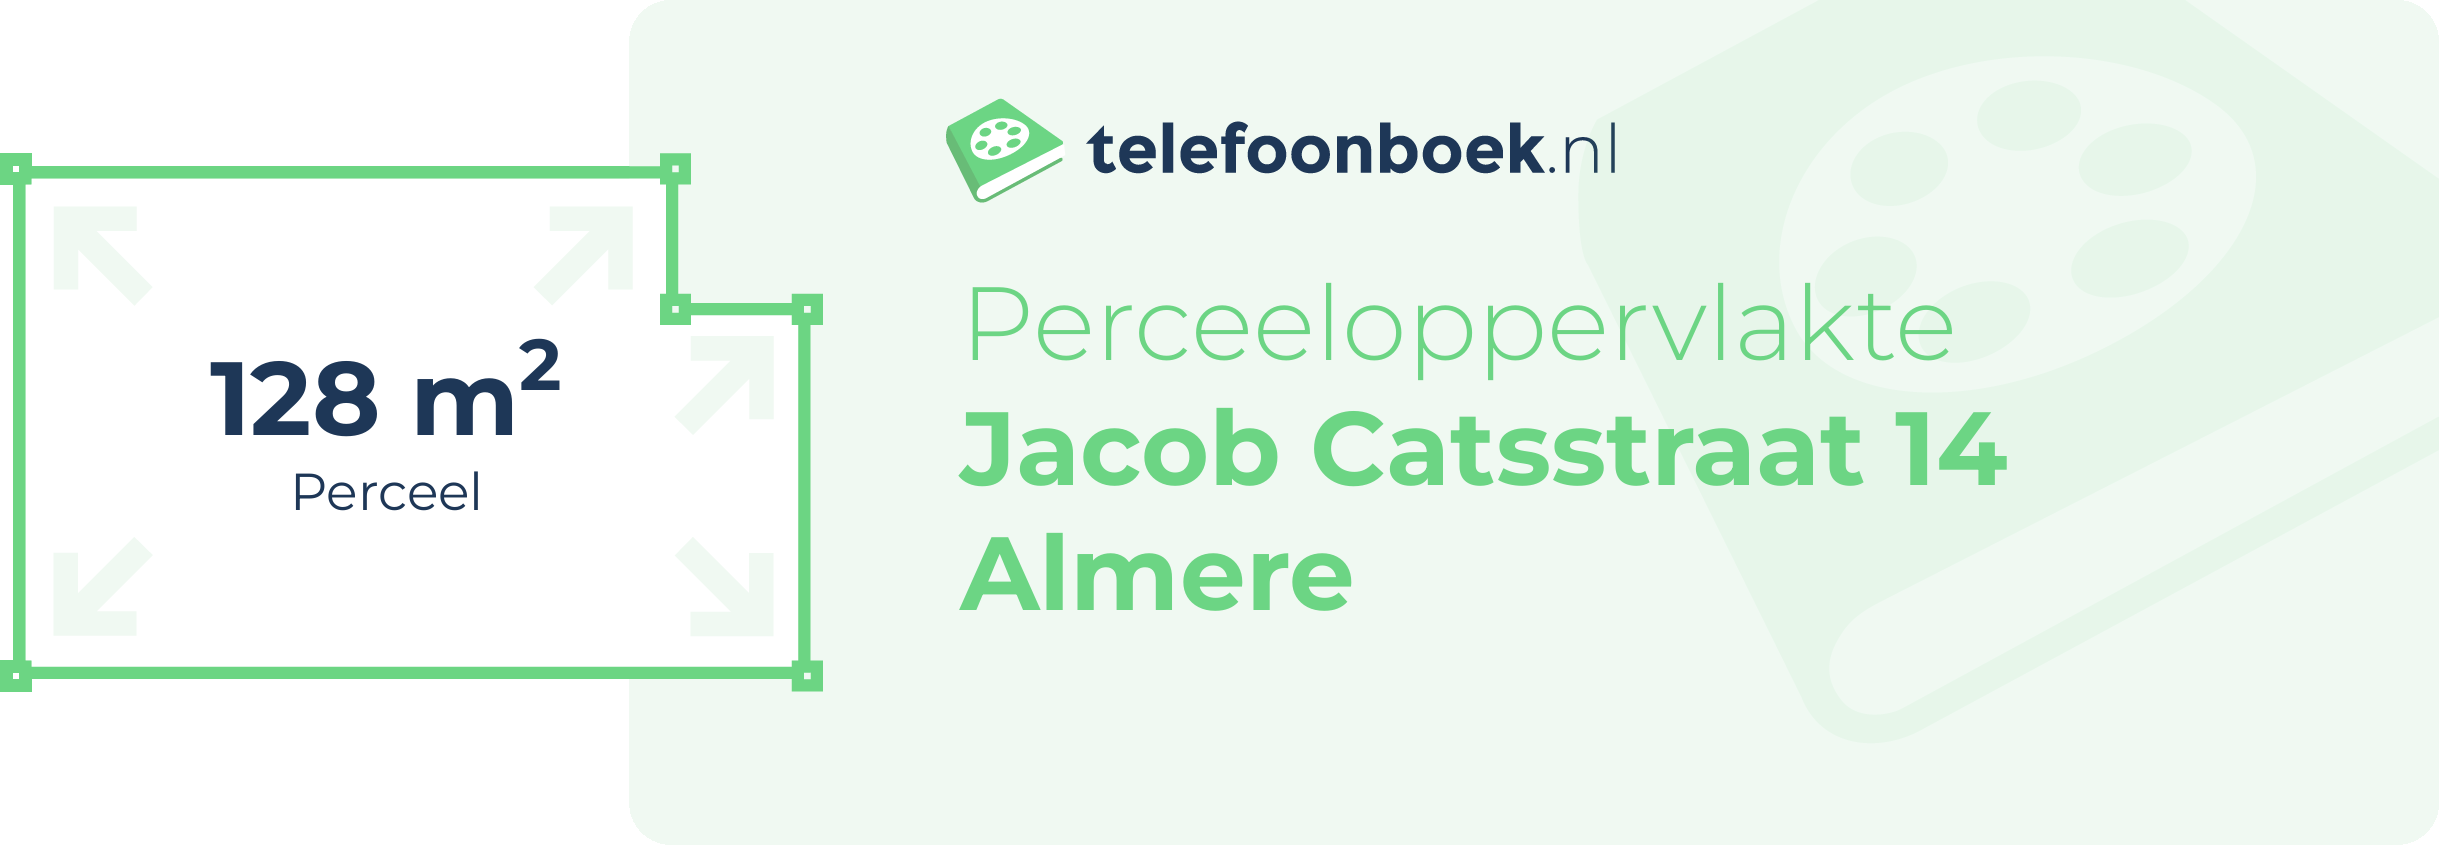 Perceeloppervlakte Jacob Catsstraat 14 Almere